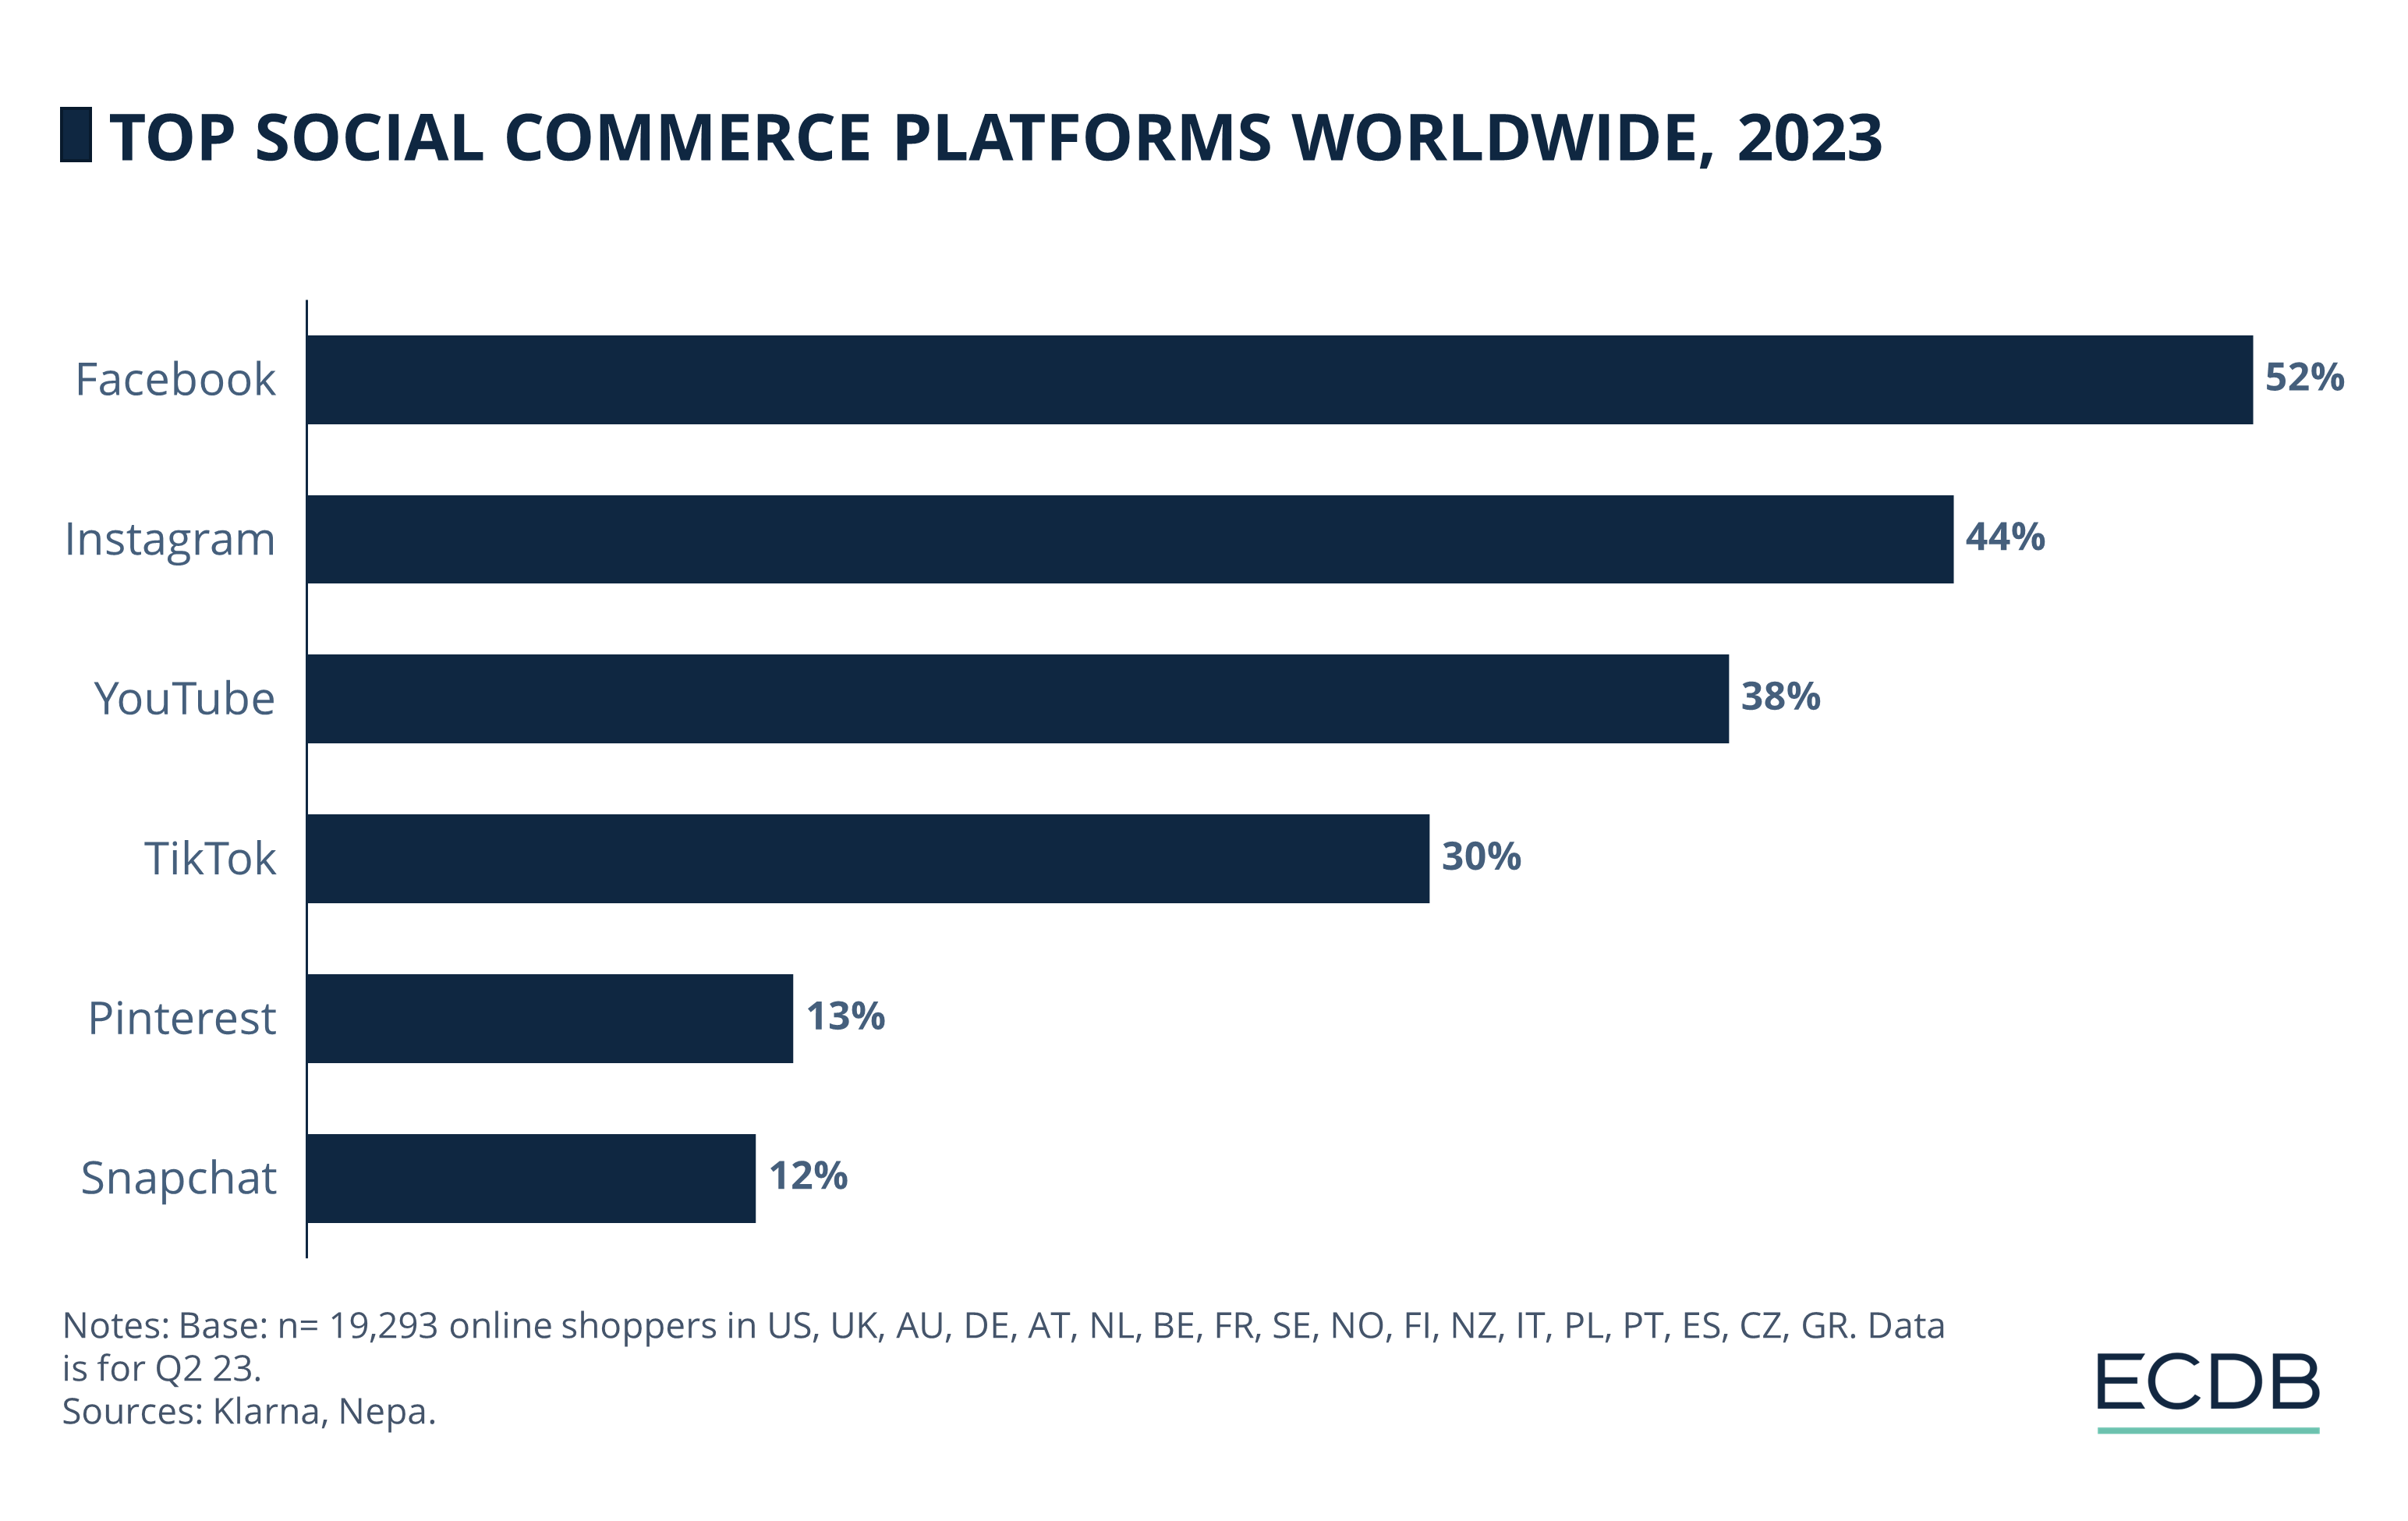 Top Social Commerce Platforms Worldwide, 2023